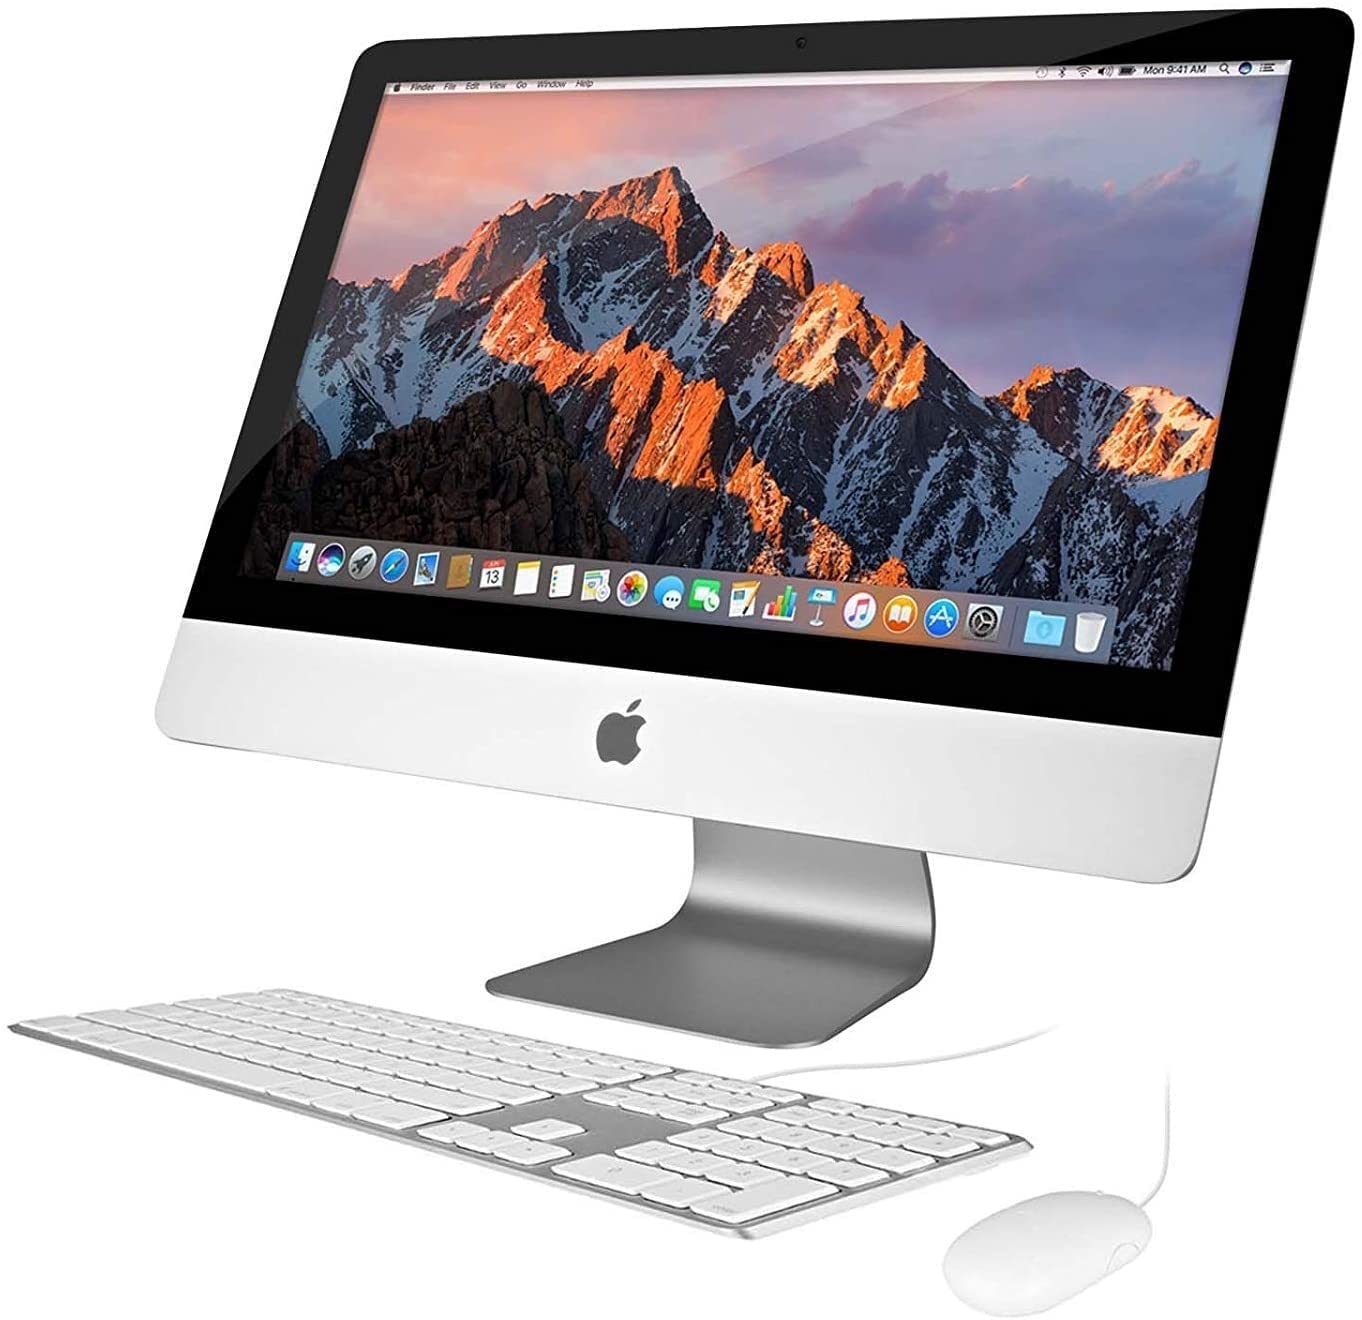 Certified Used 21.5" 2017 Apple iMac with Intel Core i5, 8GB RAM, 1TB Storage